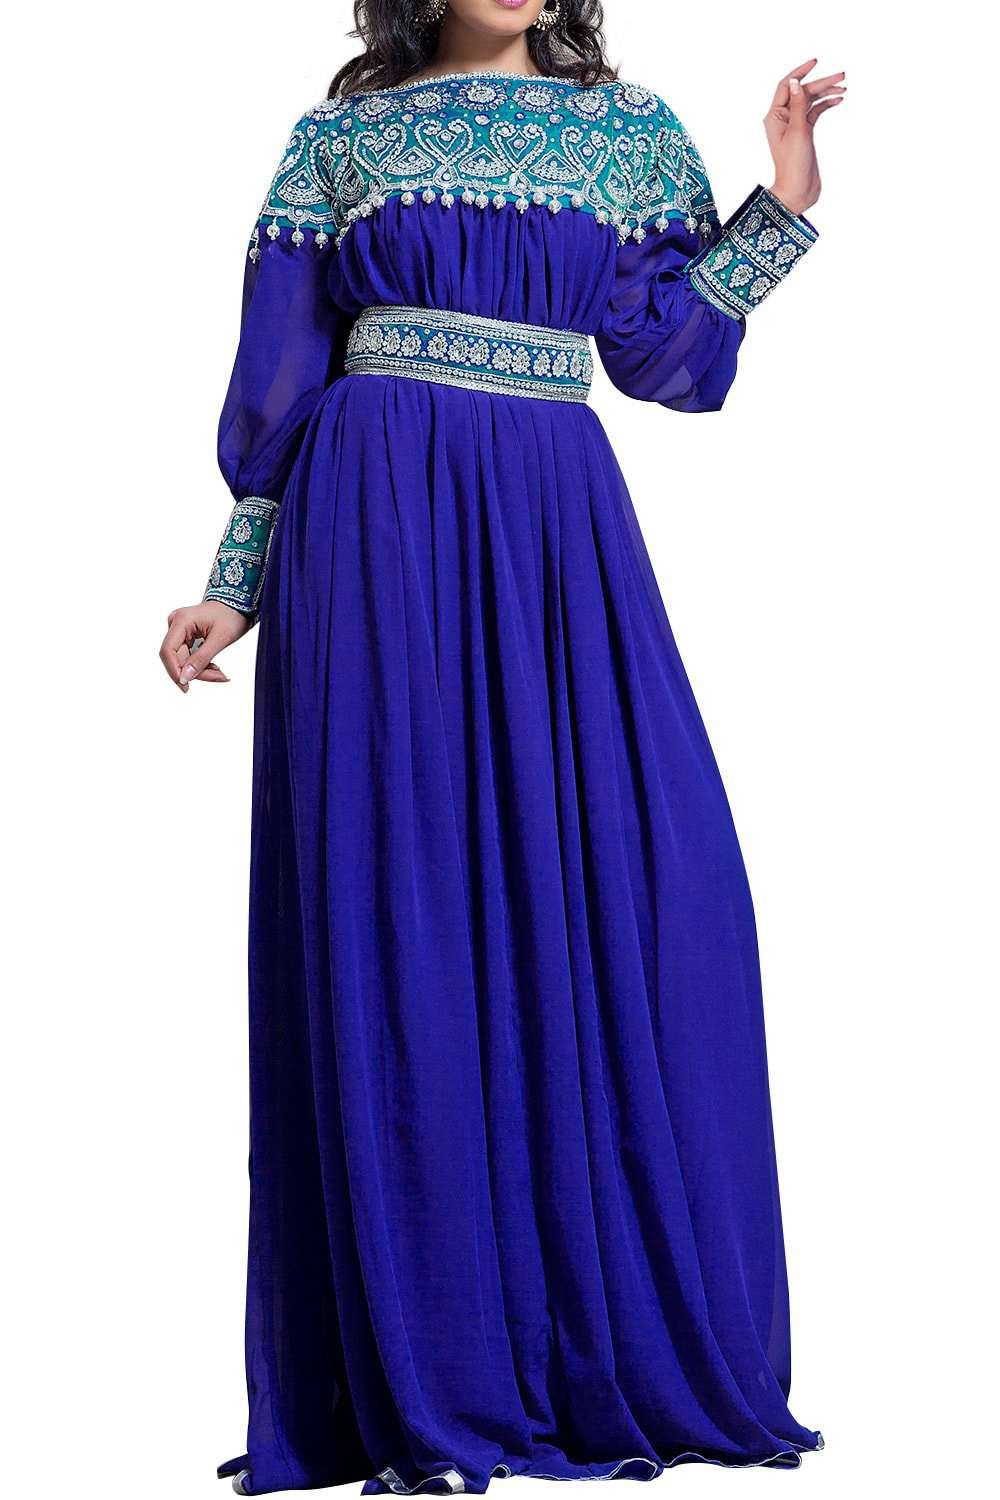 Tantalizing Blue color Maxi Full sleeve Islamic dress